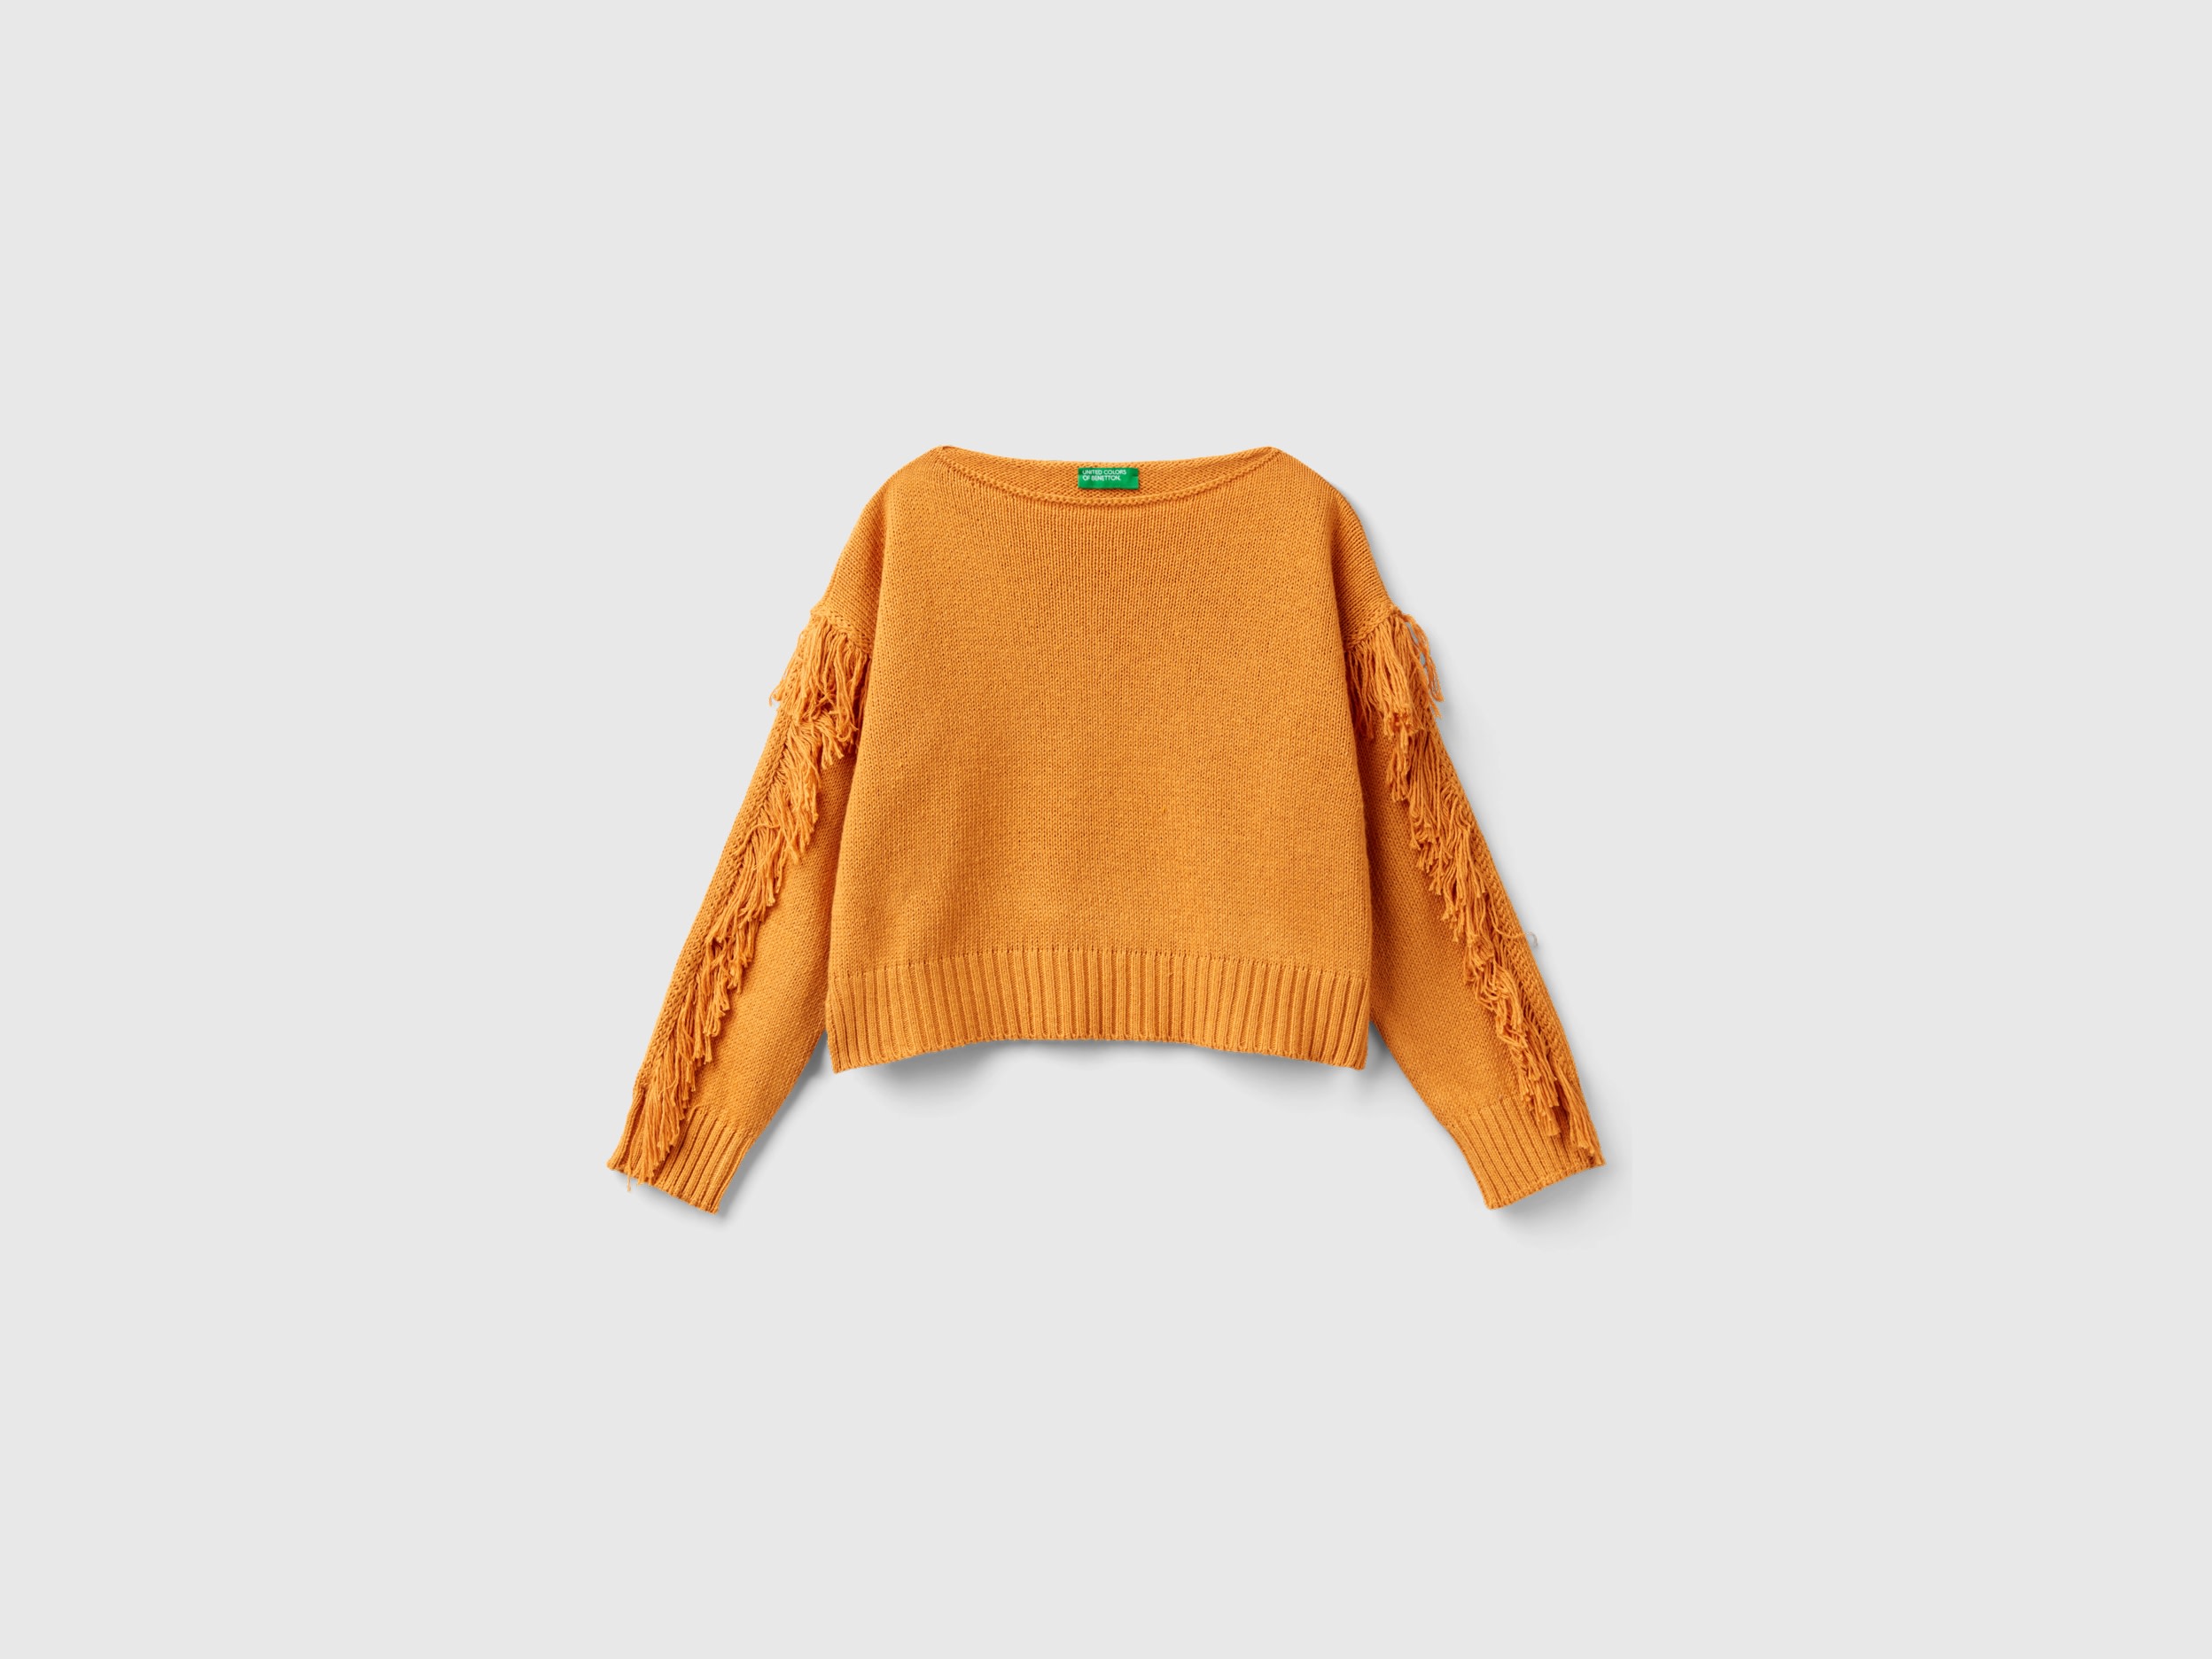 Image of Benetton, Sweater With Fringe, size XL, Camel, Kids